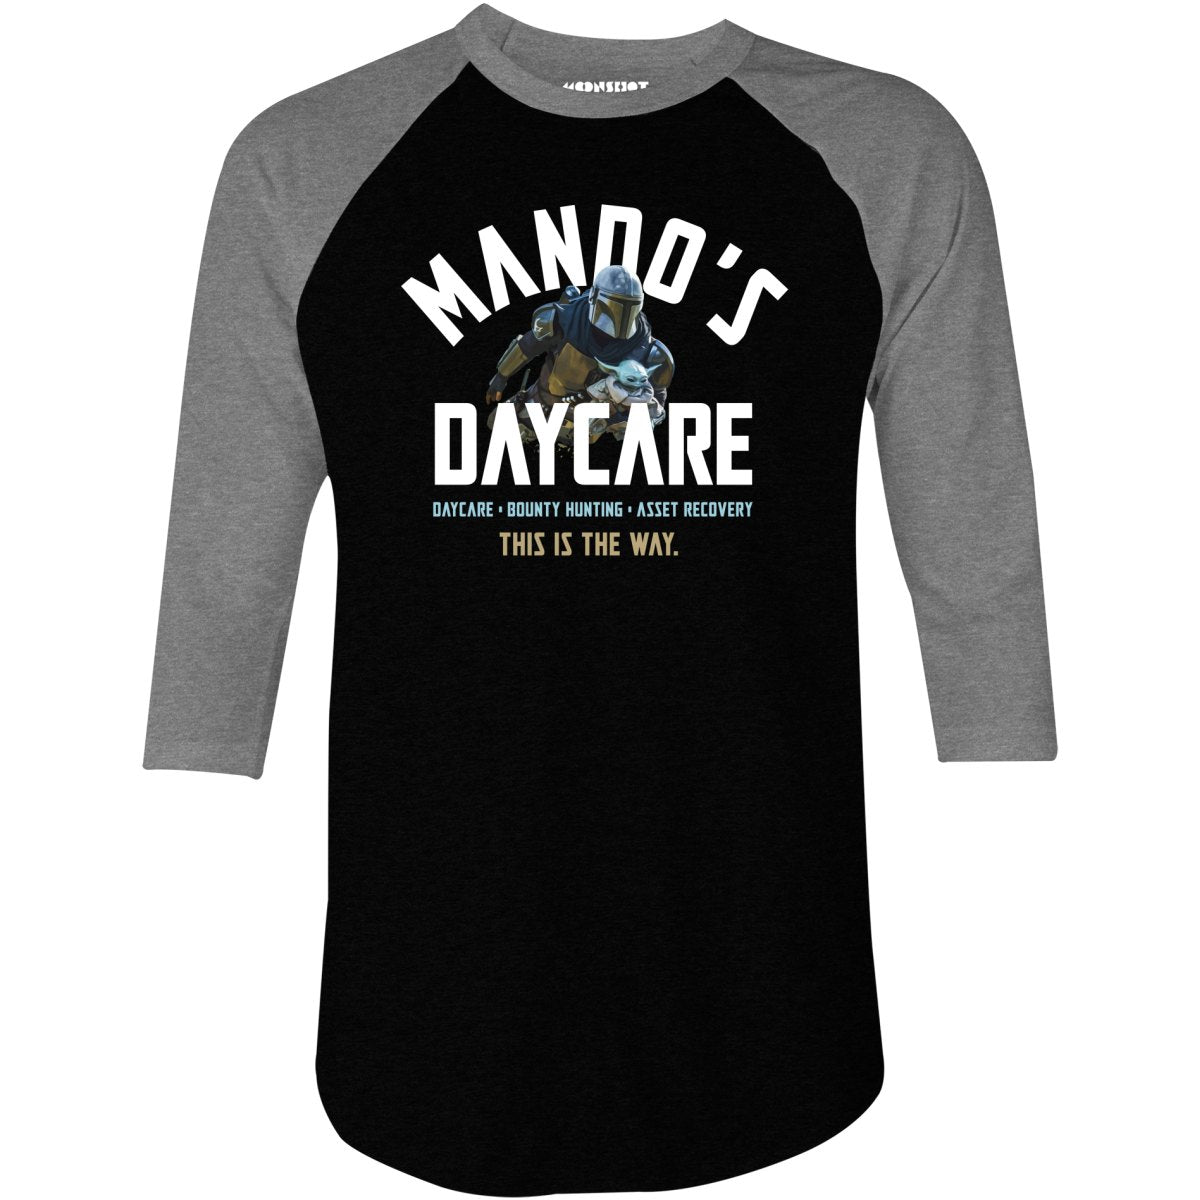 Mando's Daycare - 3/4 Sleeve Raglan T-Shirt